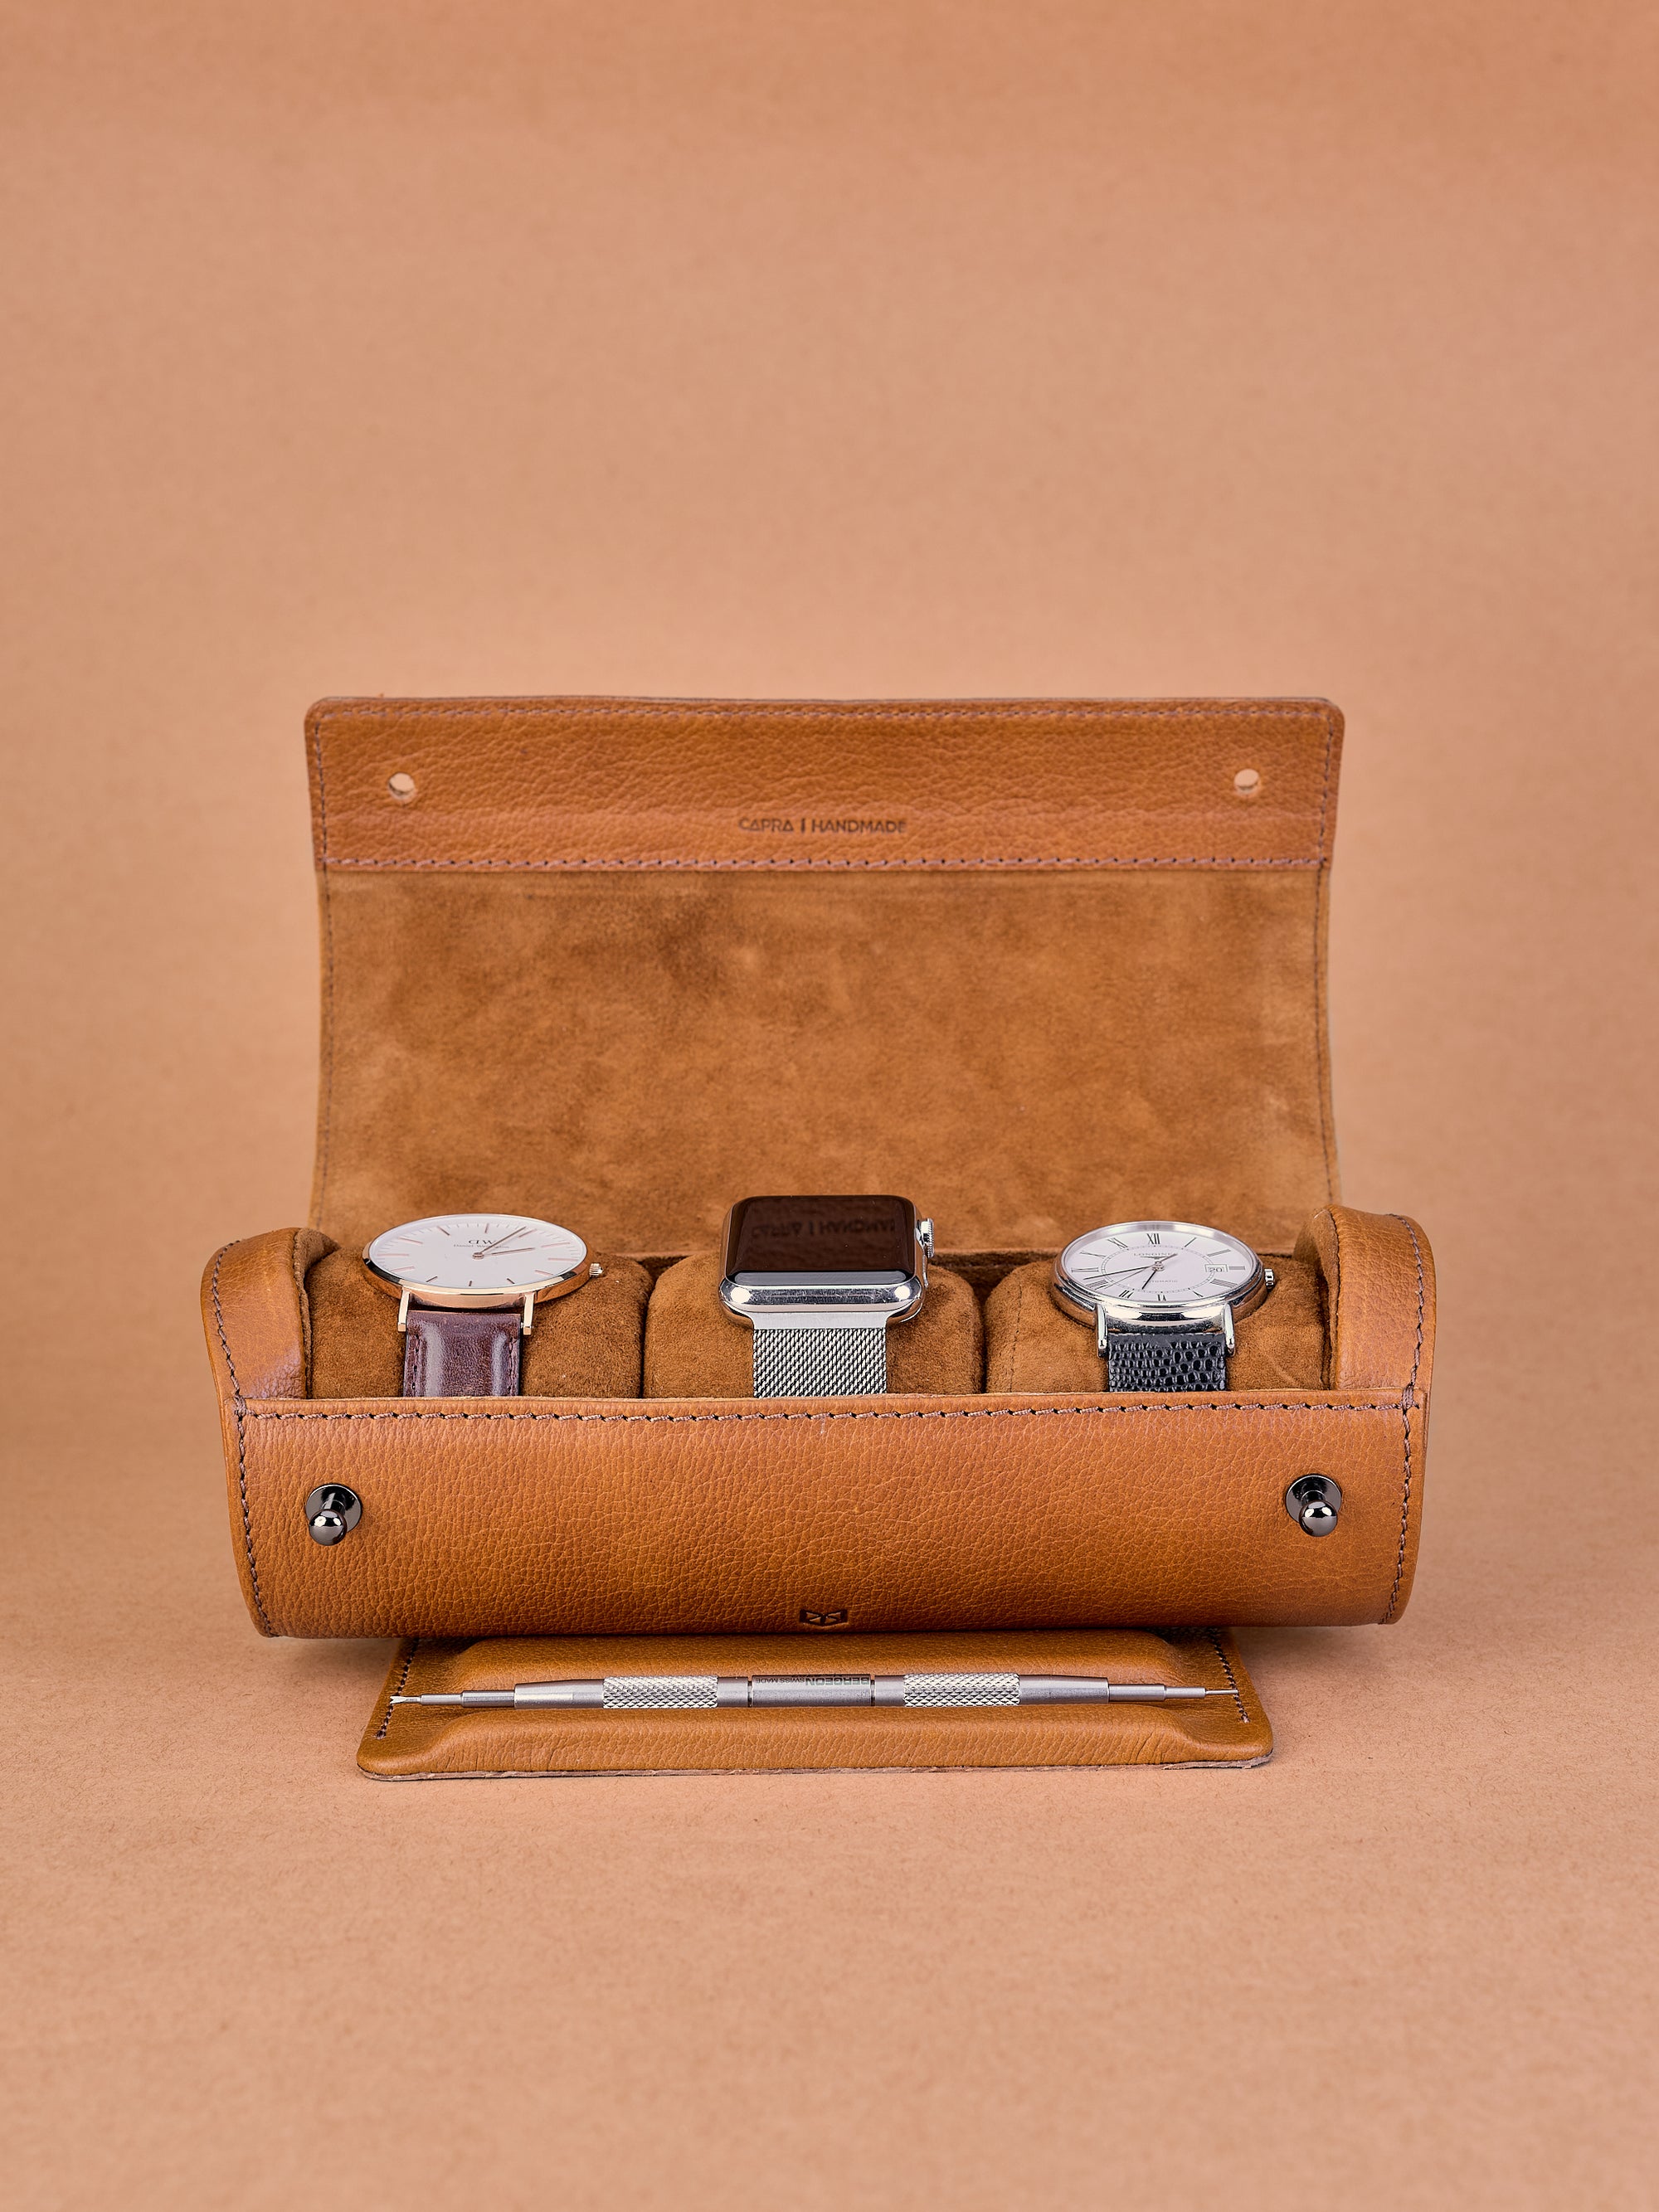 Apple watch travel case tan